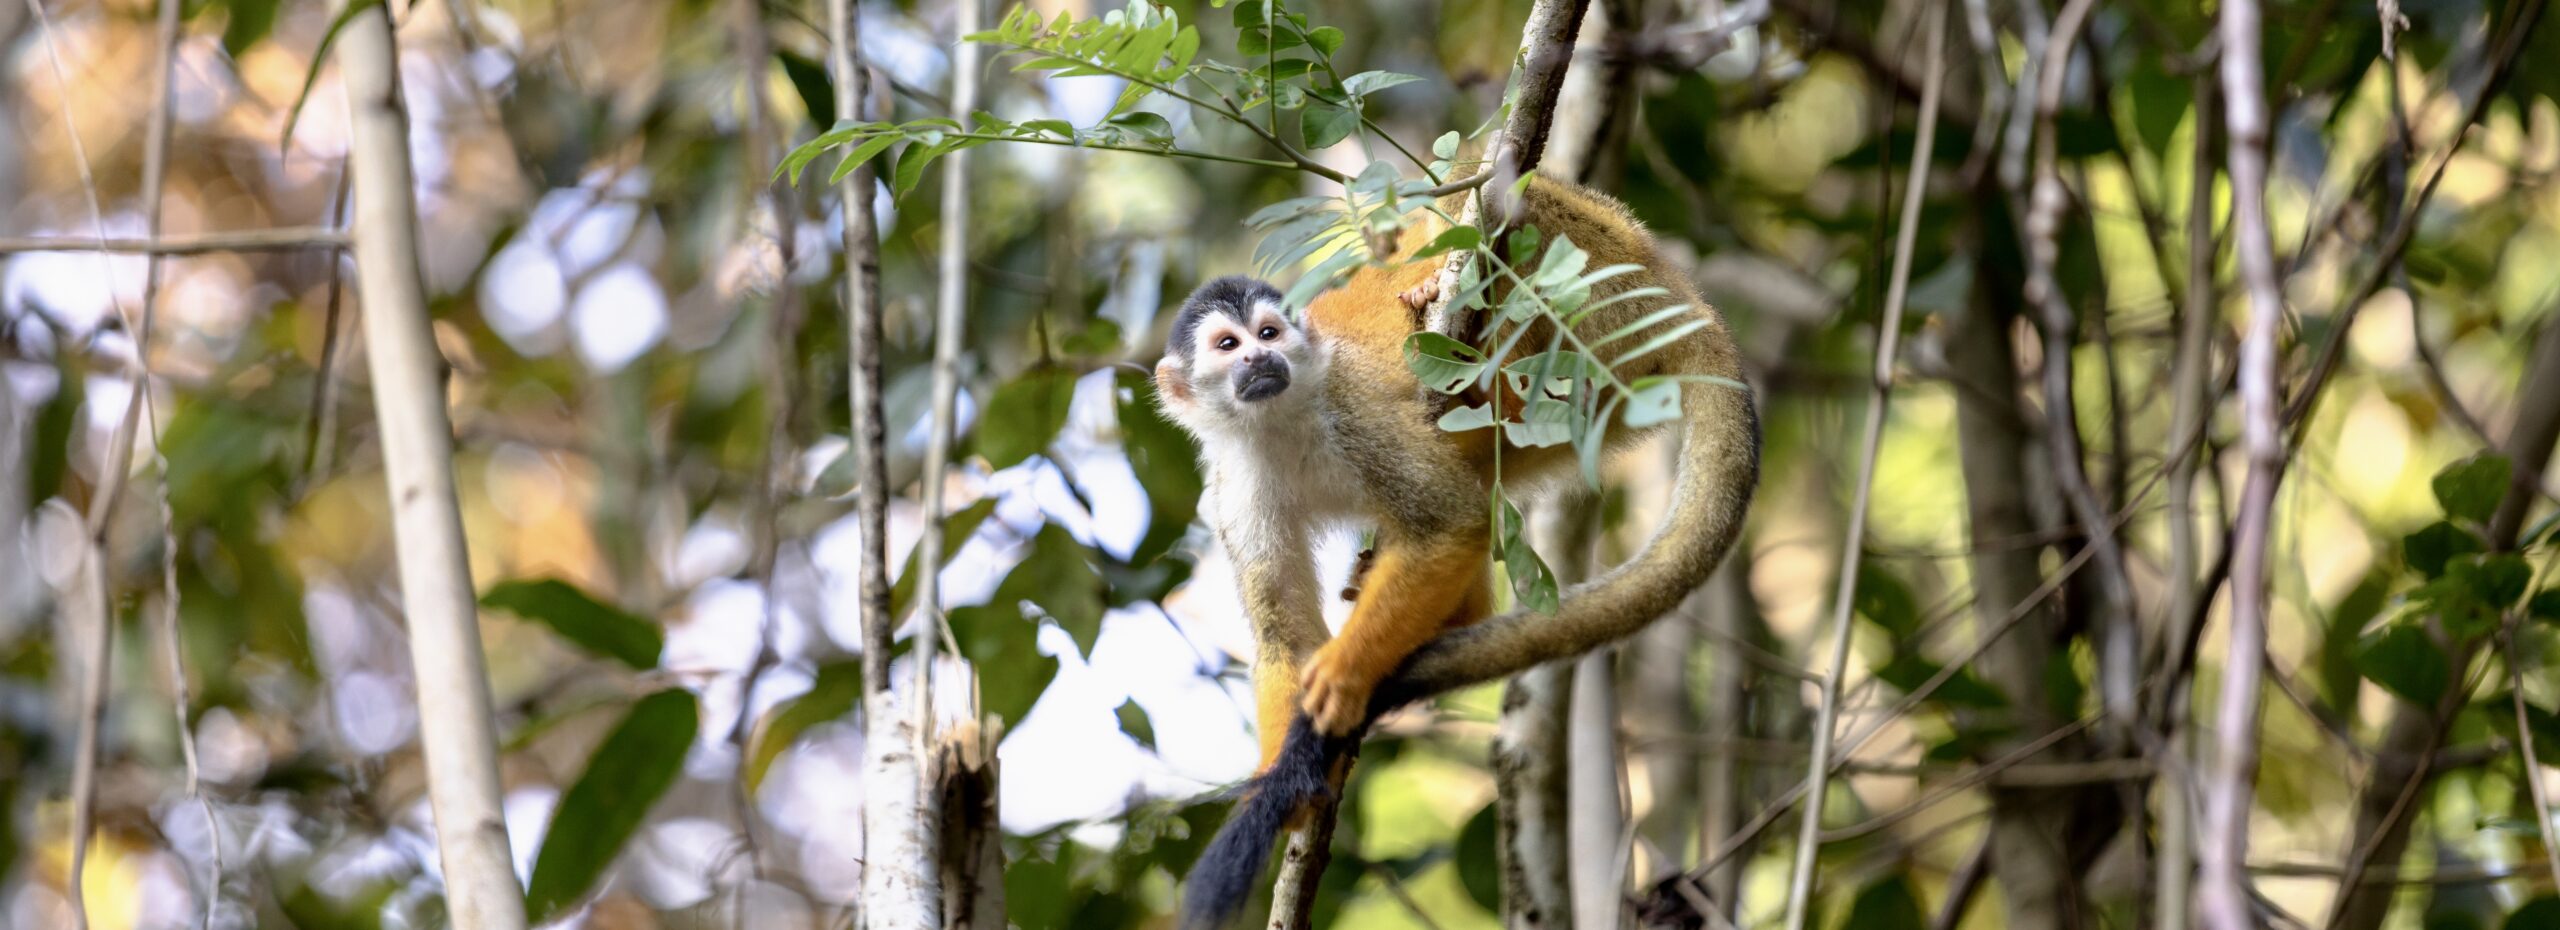 Ecotour Monkeys on the Osa Peninsula